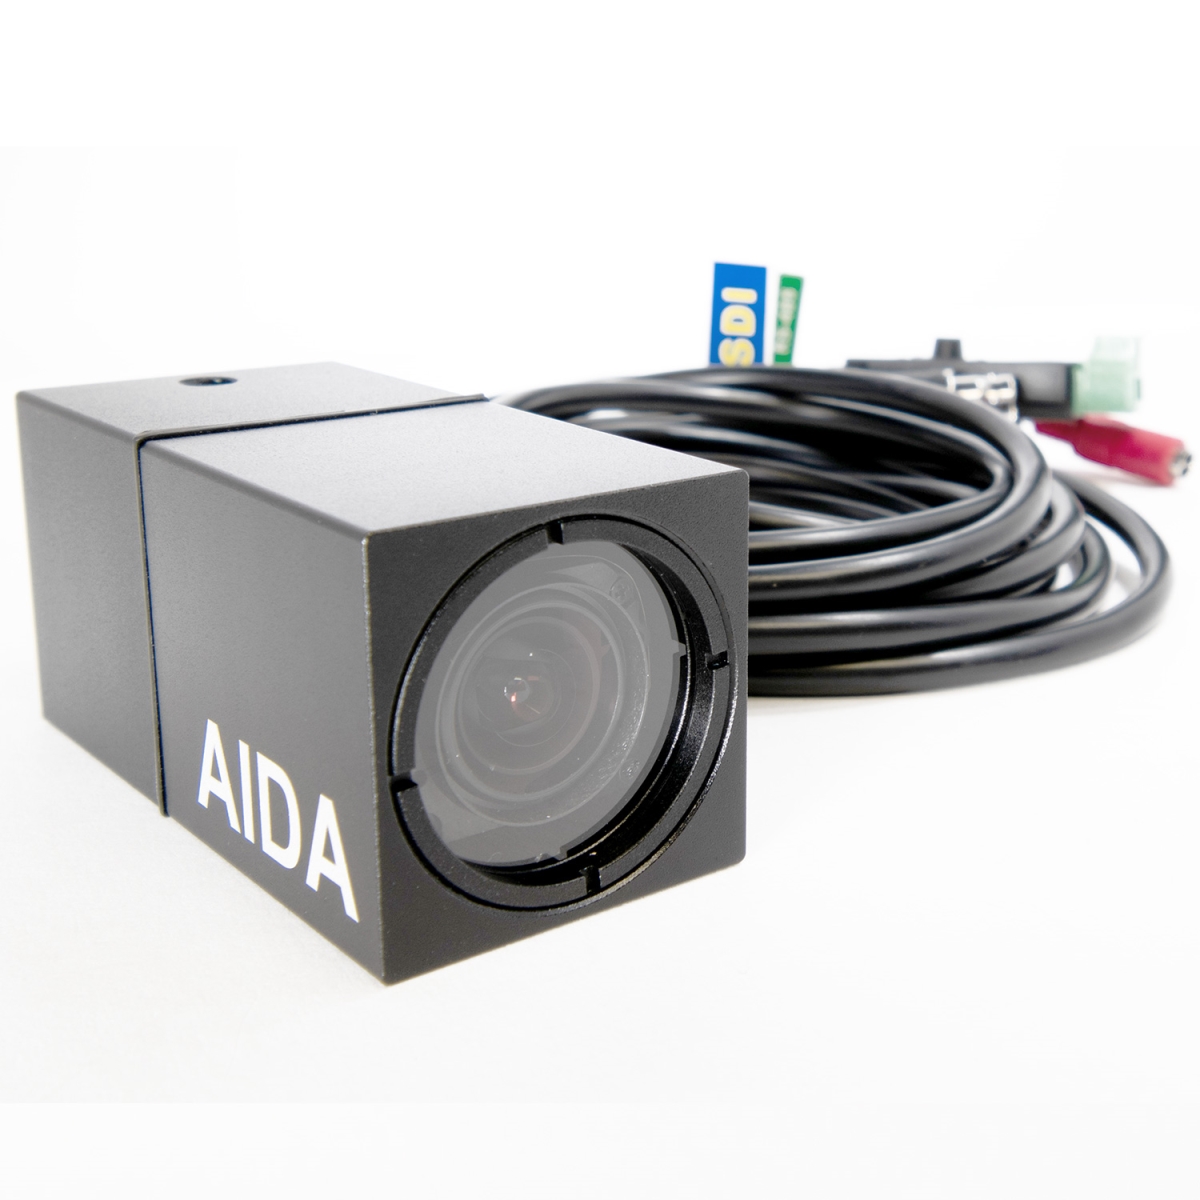 Picture of Aida Imaging AIDA-HD-X37-IP67 3.5x Optical Zoom POV Camera